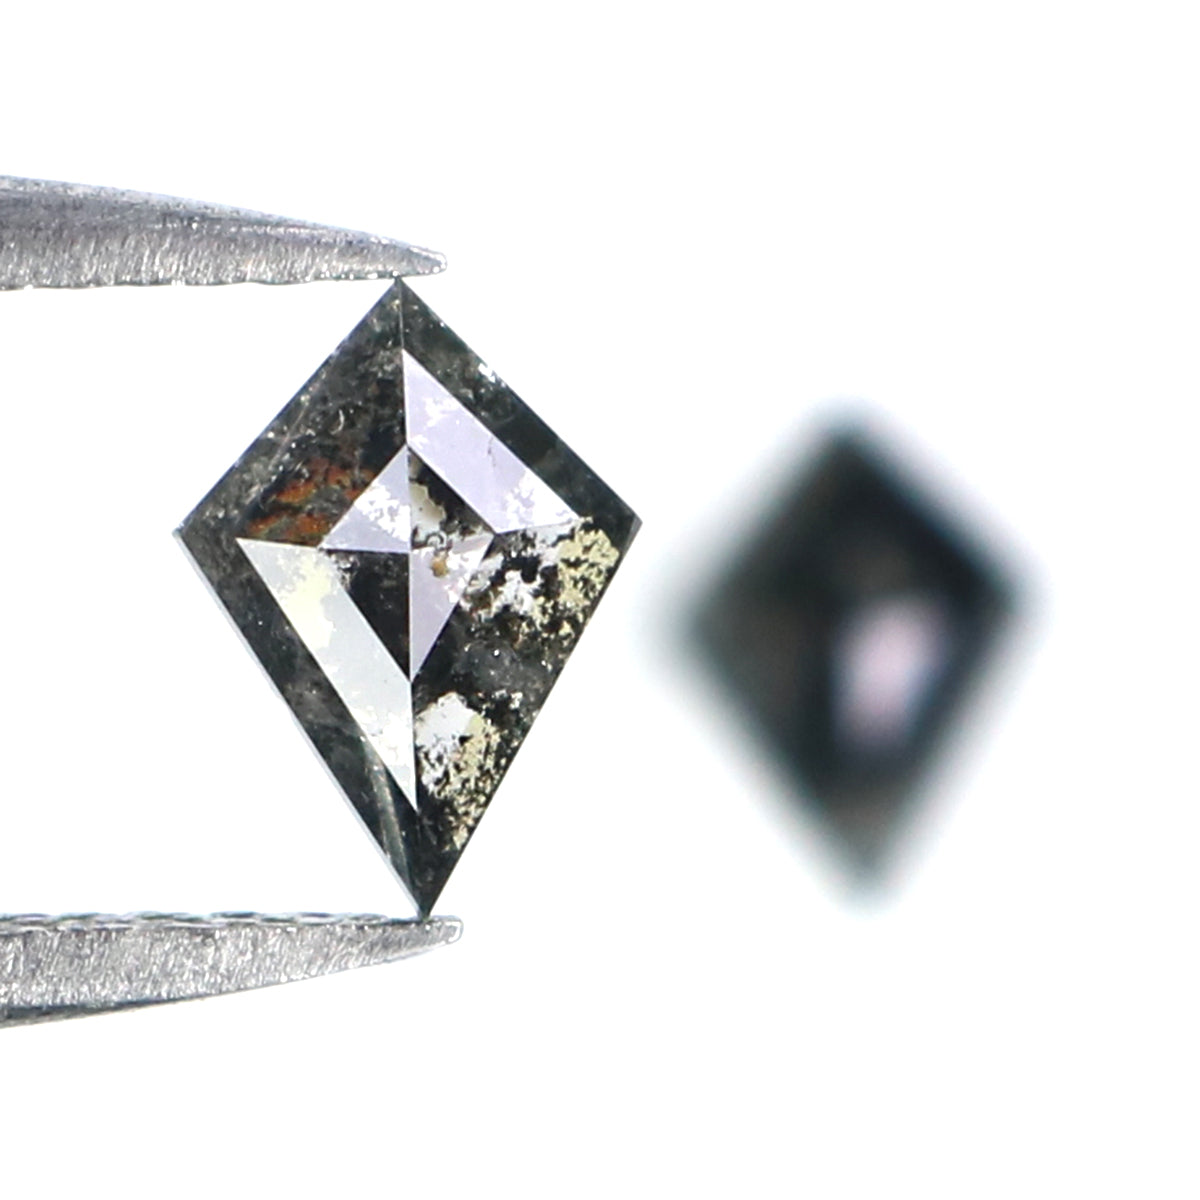 Natural Loose Kite Diamond, Salt And Pepper Kite Diamond, Natural Loose Diamond, Kite Rose Cut Diamond, Kite Cut, 0.66 CT Kite Shape KDL2801